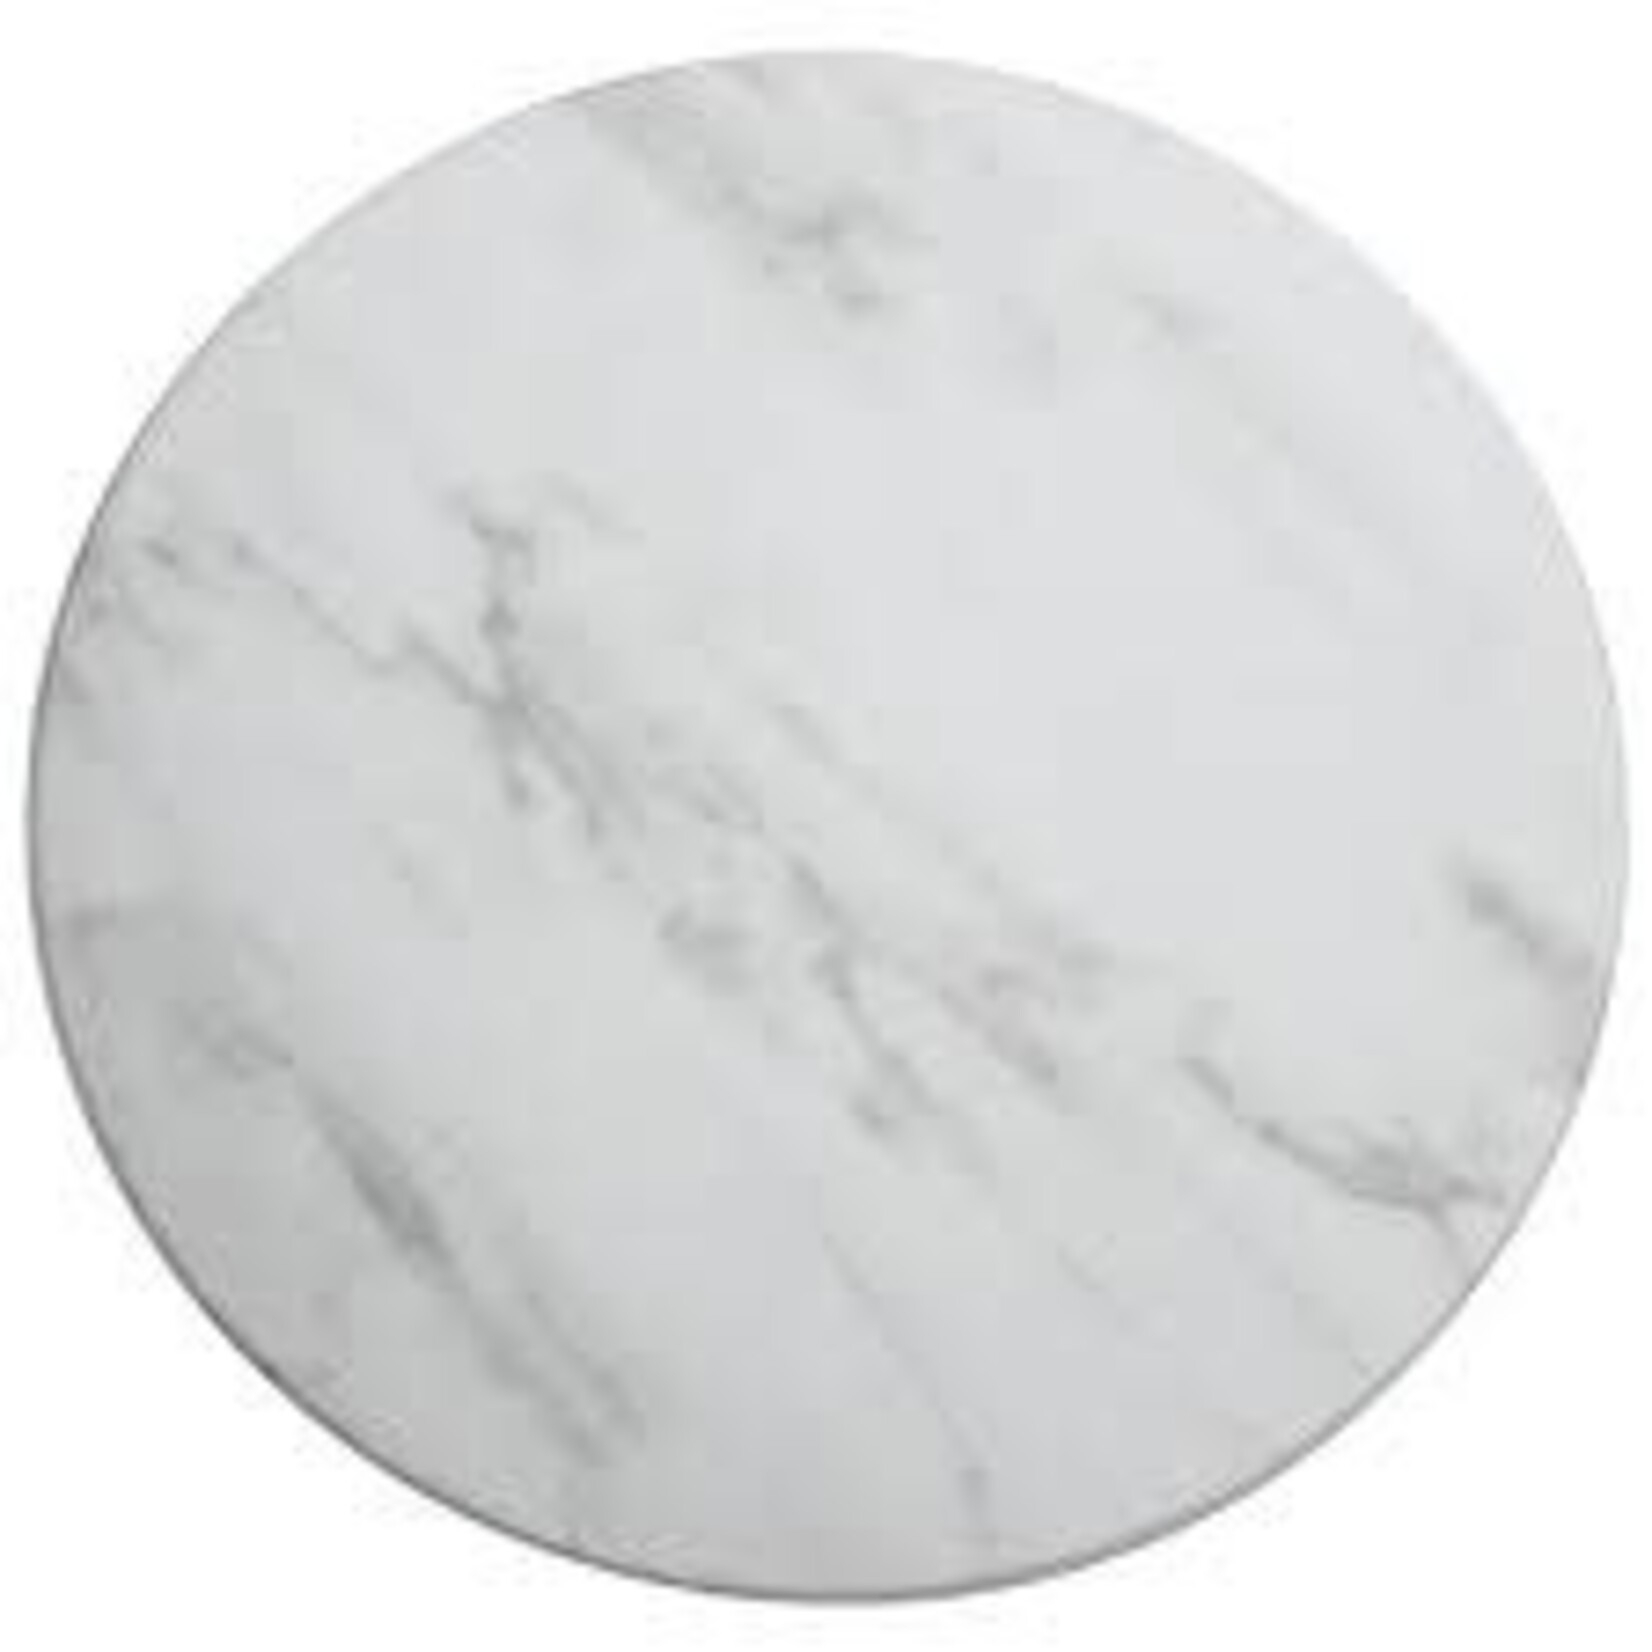 AMC MW21 Amc 21.5" marble board round white melamine